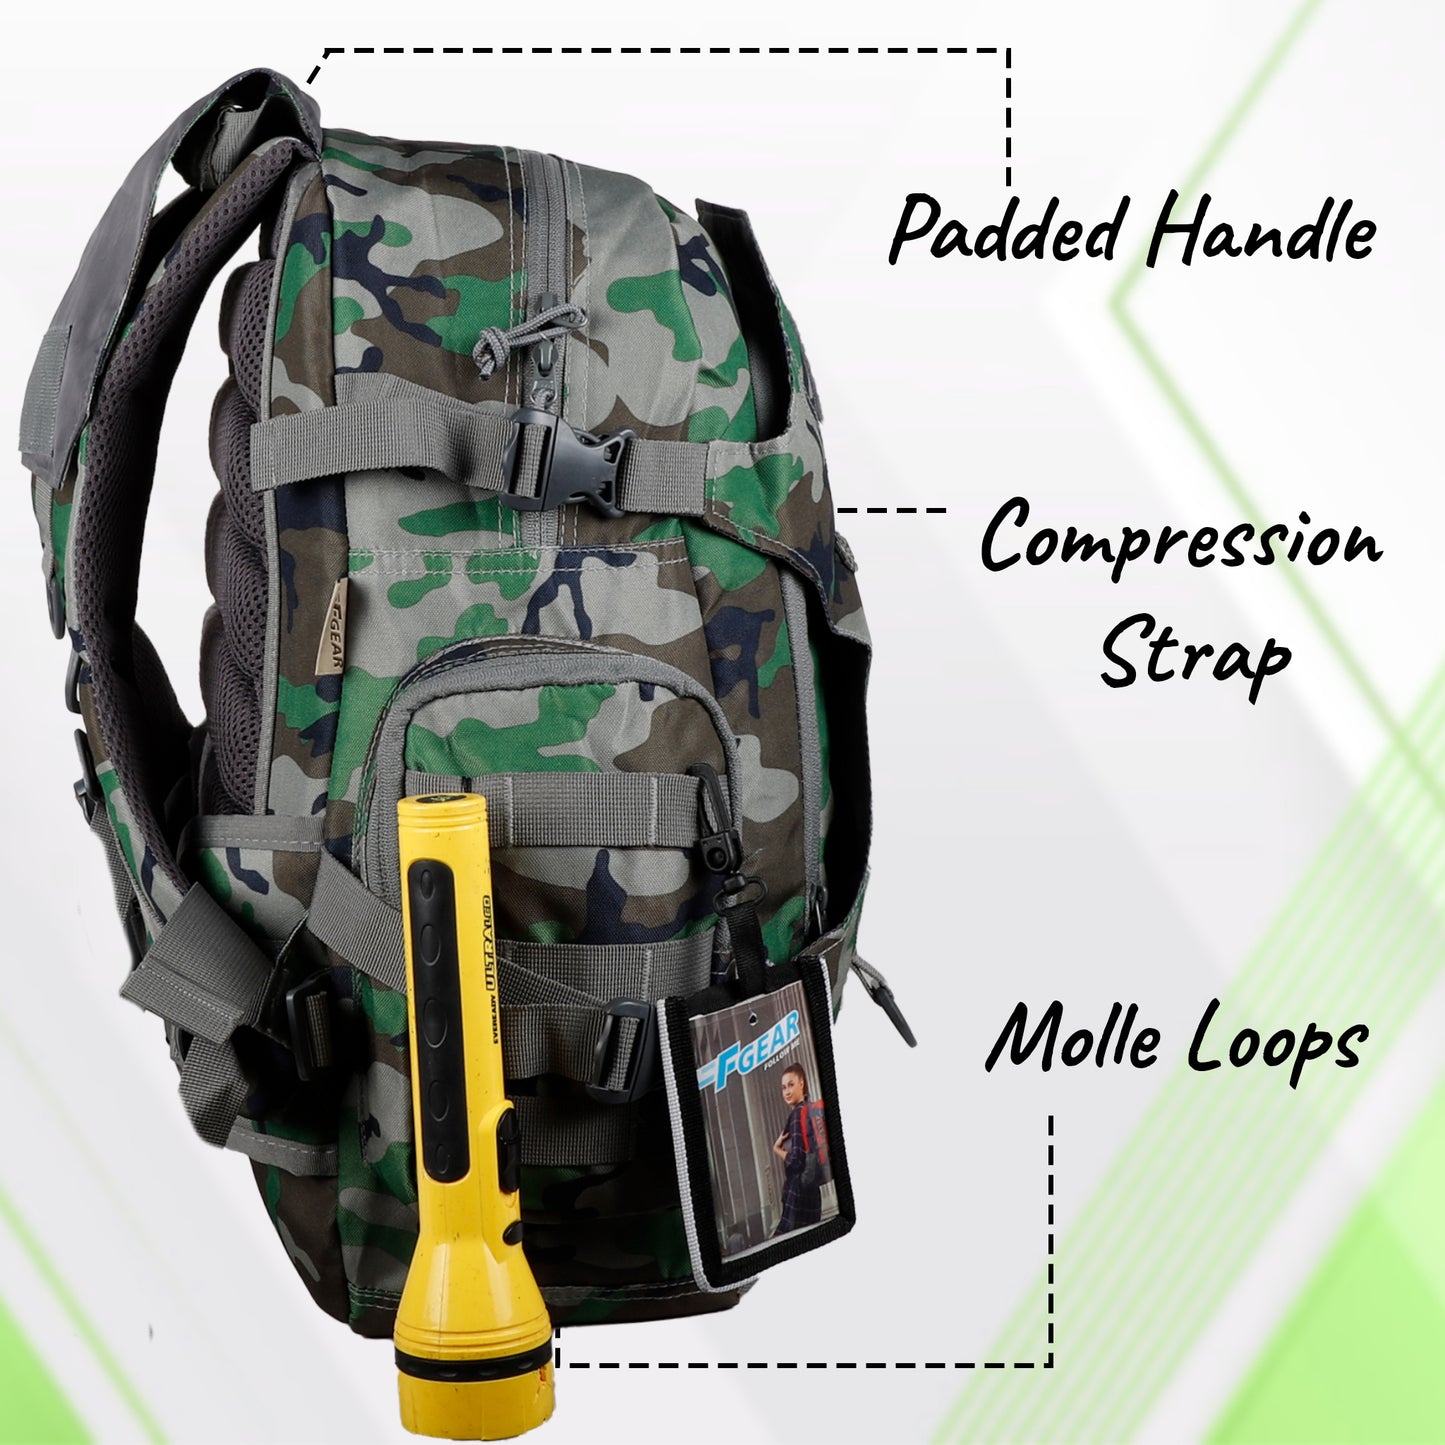 F Gear Military Ambush 32 Liter Rucksack Backpack (Woodland A Camo)